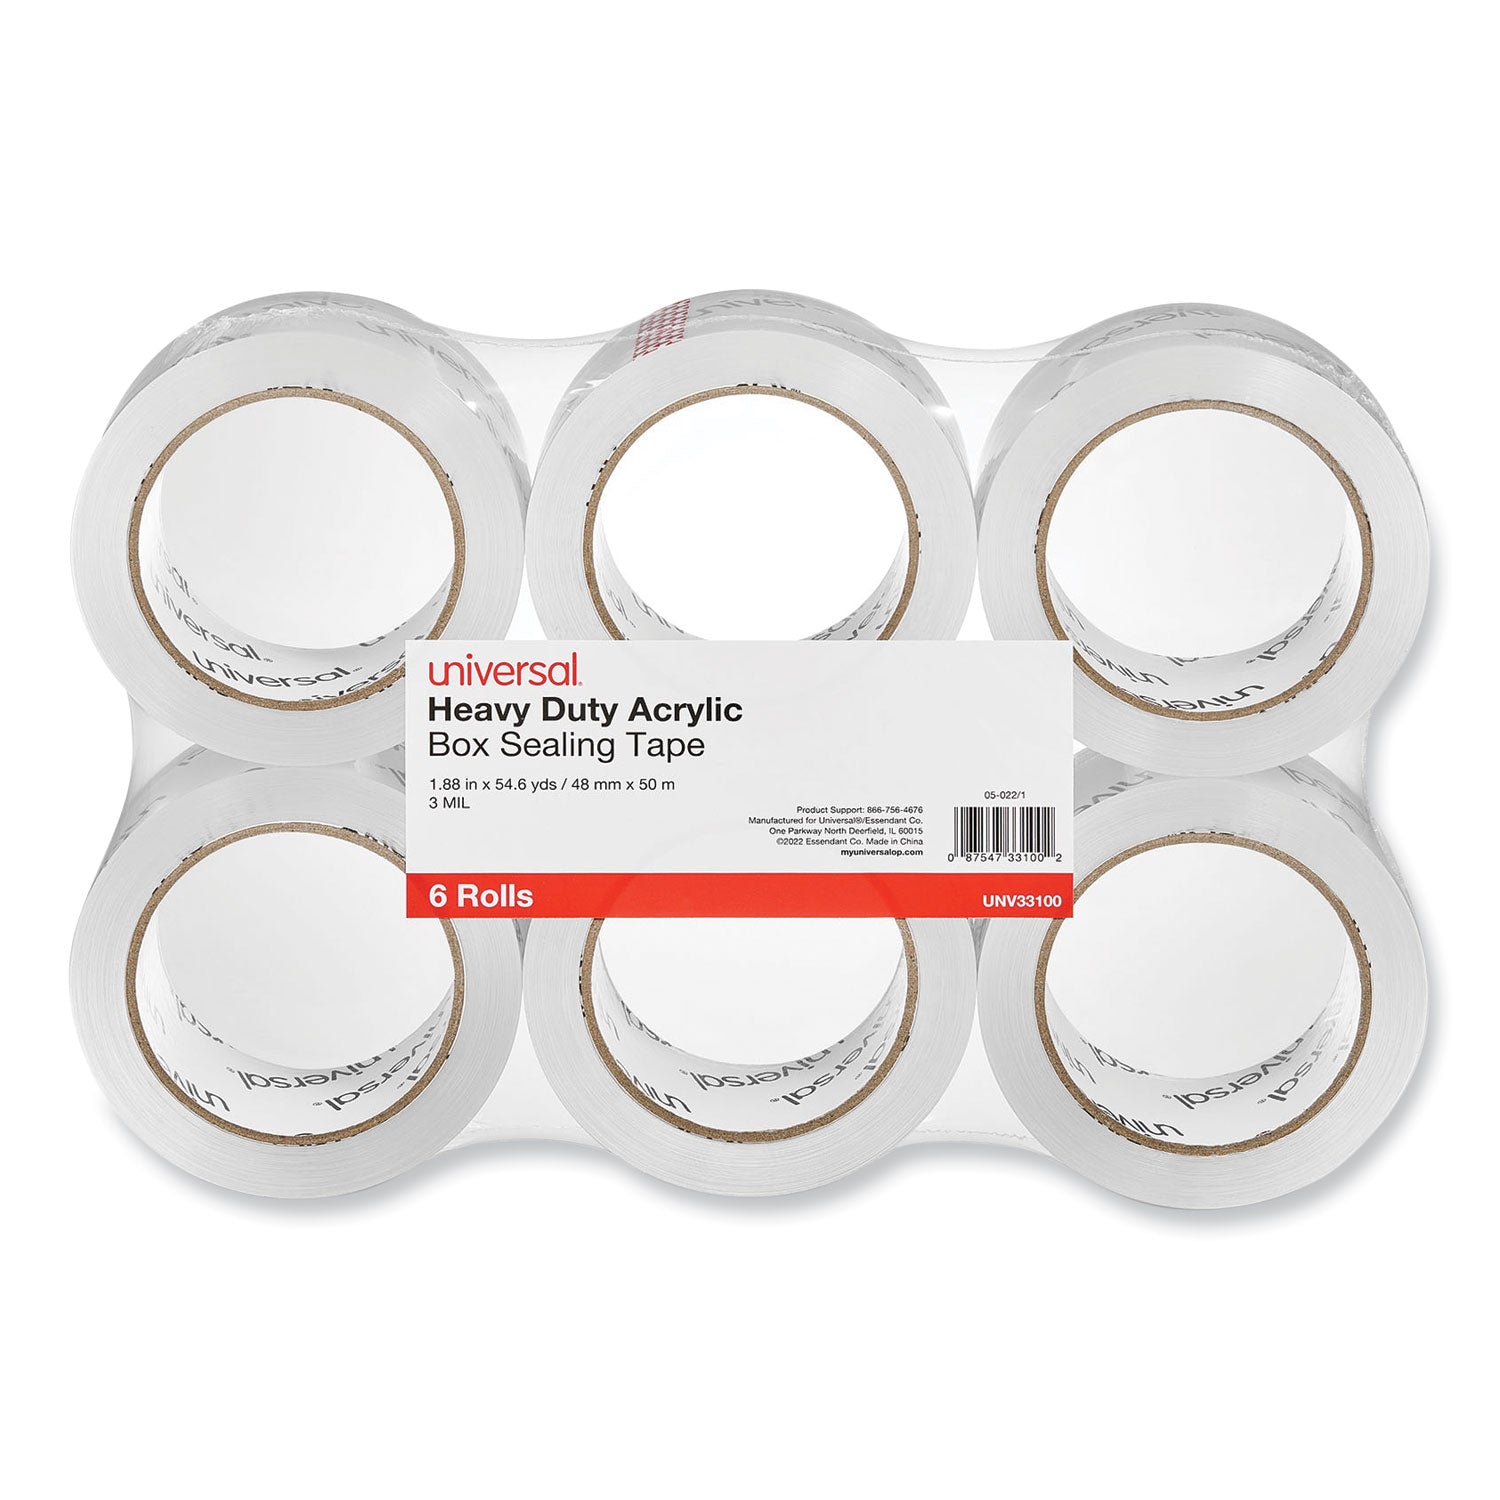 Heavy-Duty Acrylic Box Sealing Tape, 3" Core, 1.88" x 54.6 yds, Clear, 6/Pack - 